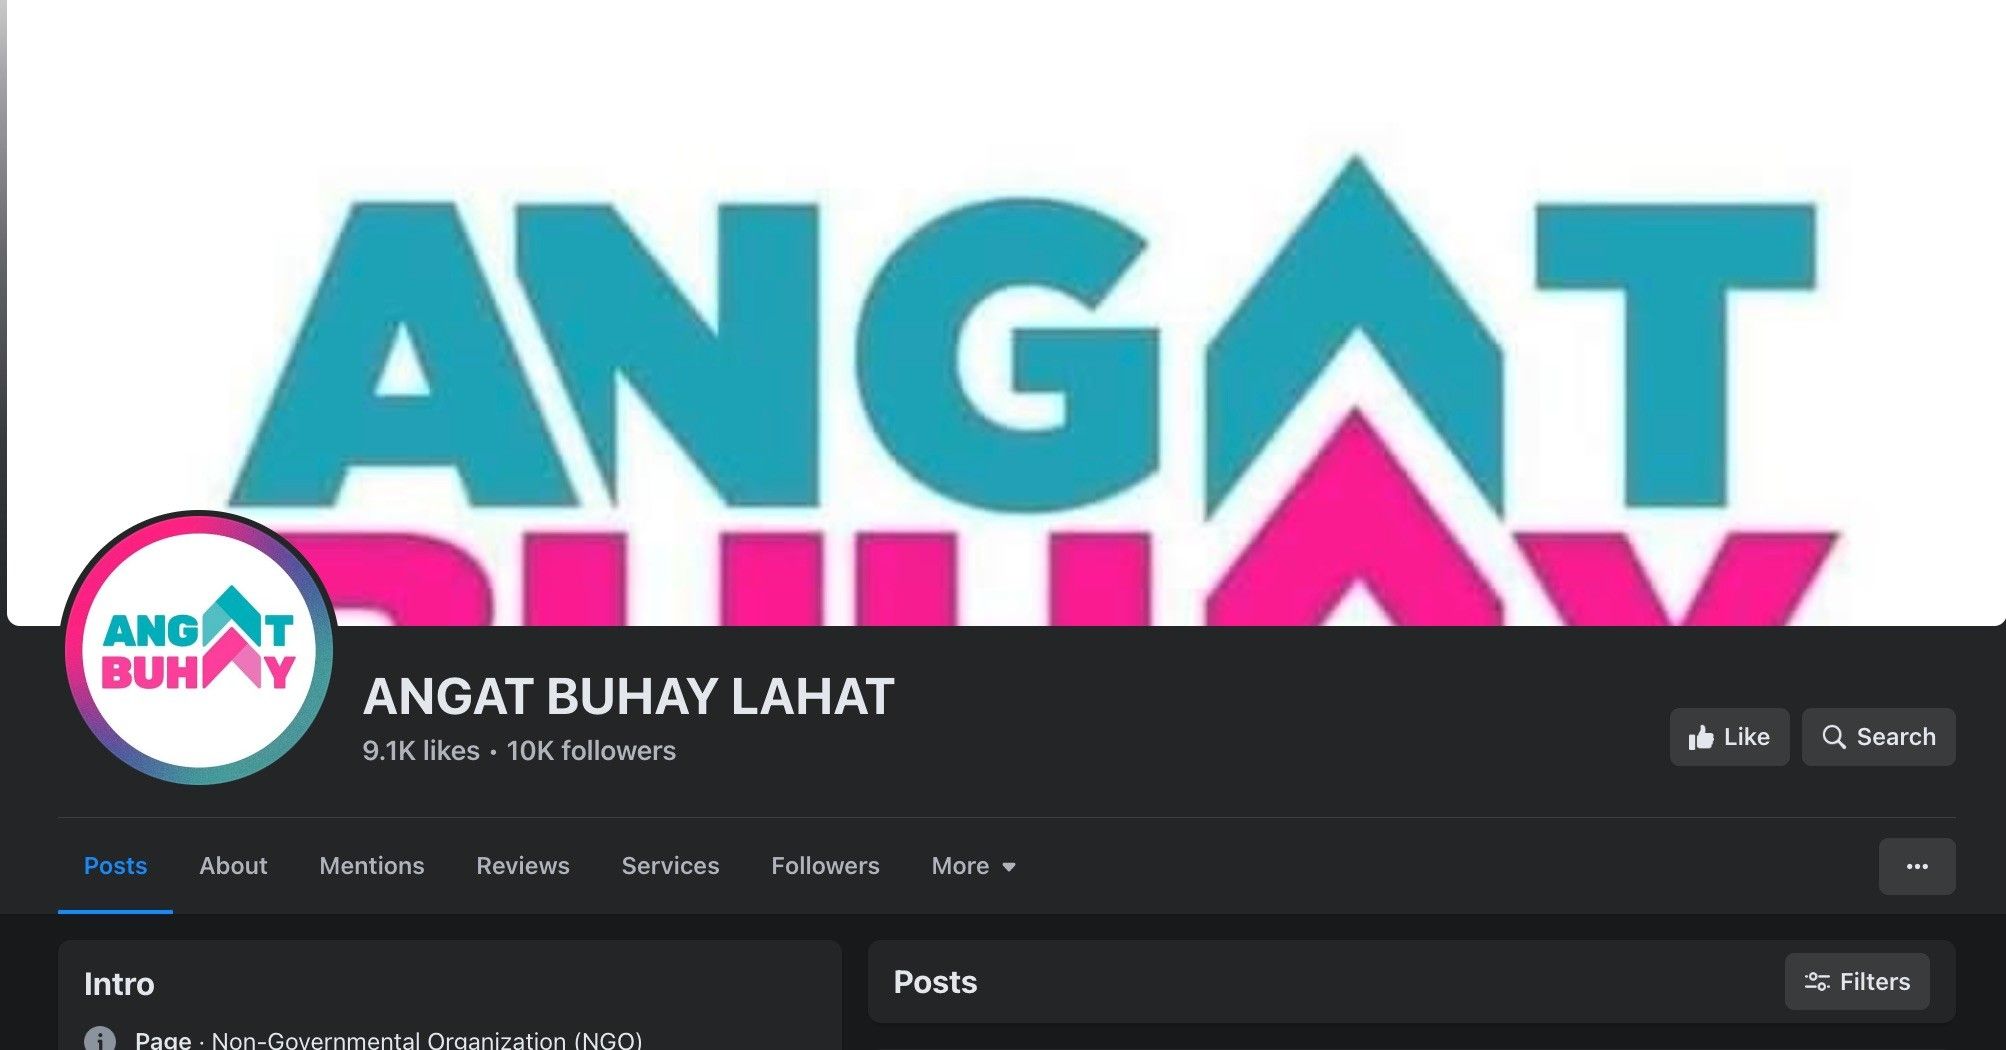 Fact Check: ANGAT BUHAY LAHAT page not associated with Robredoâ��s Angat Buhay